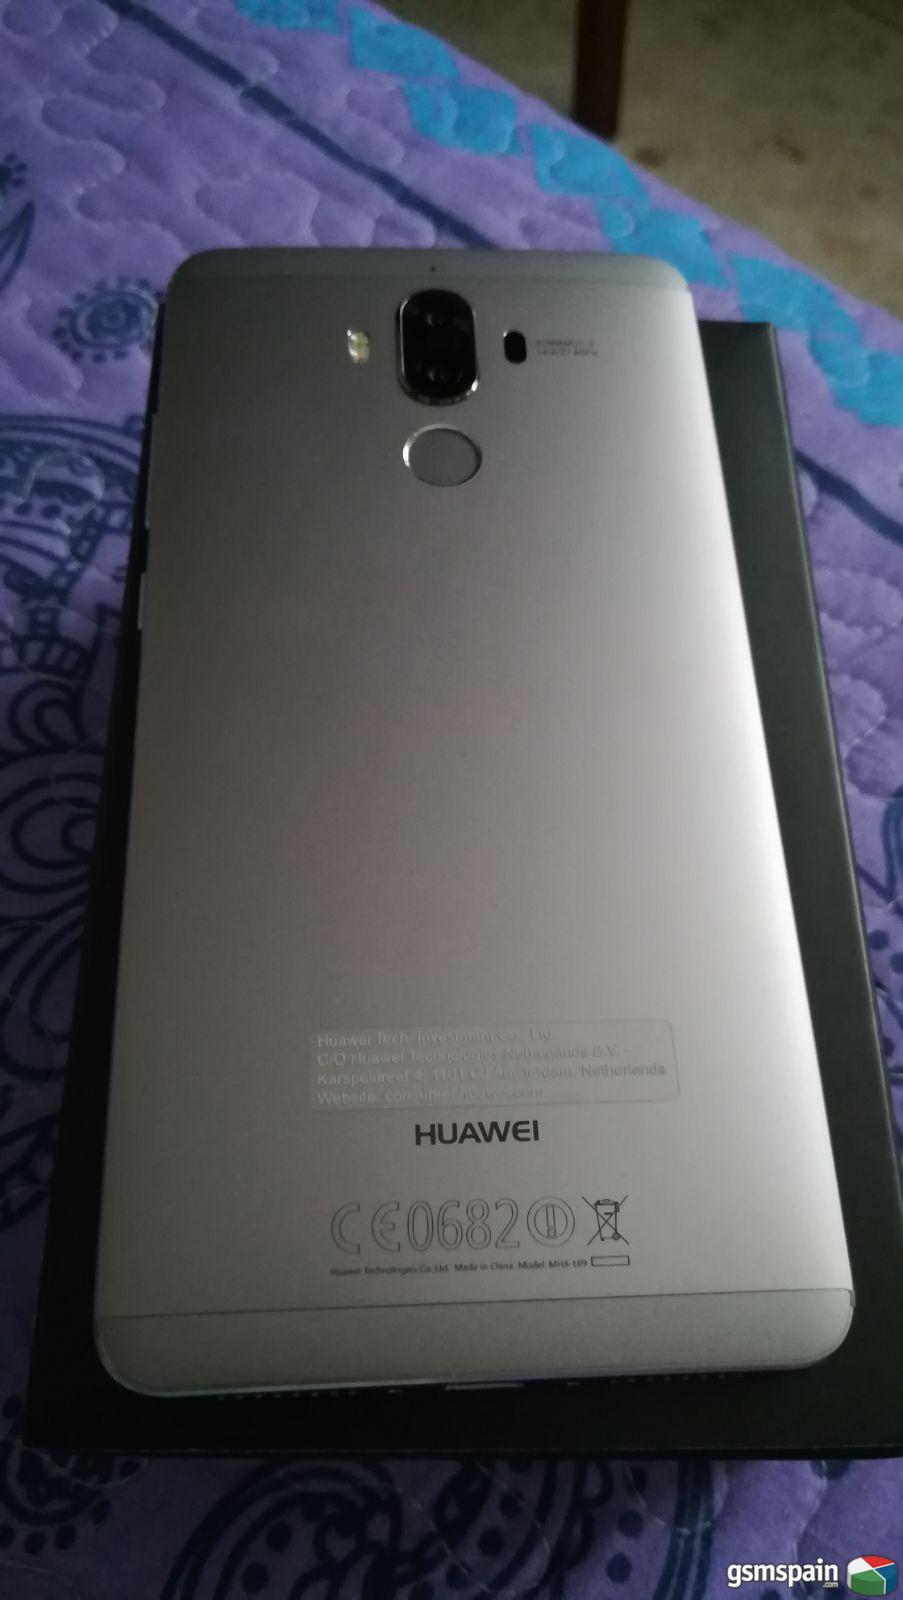 [VENDO] Huawei Mate 9 (64gb) sin uso *Venta Express*